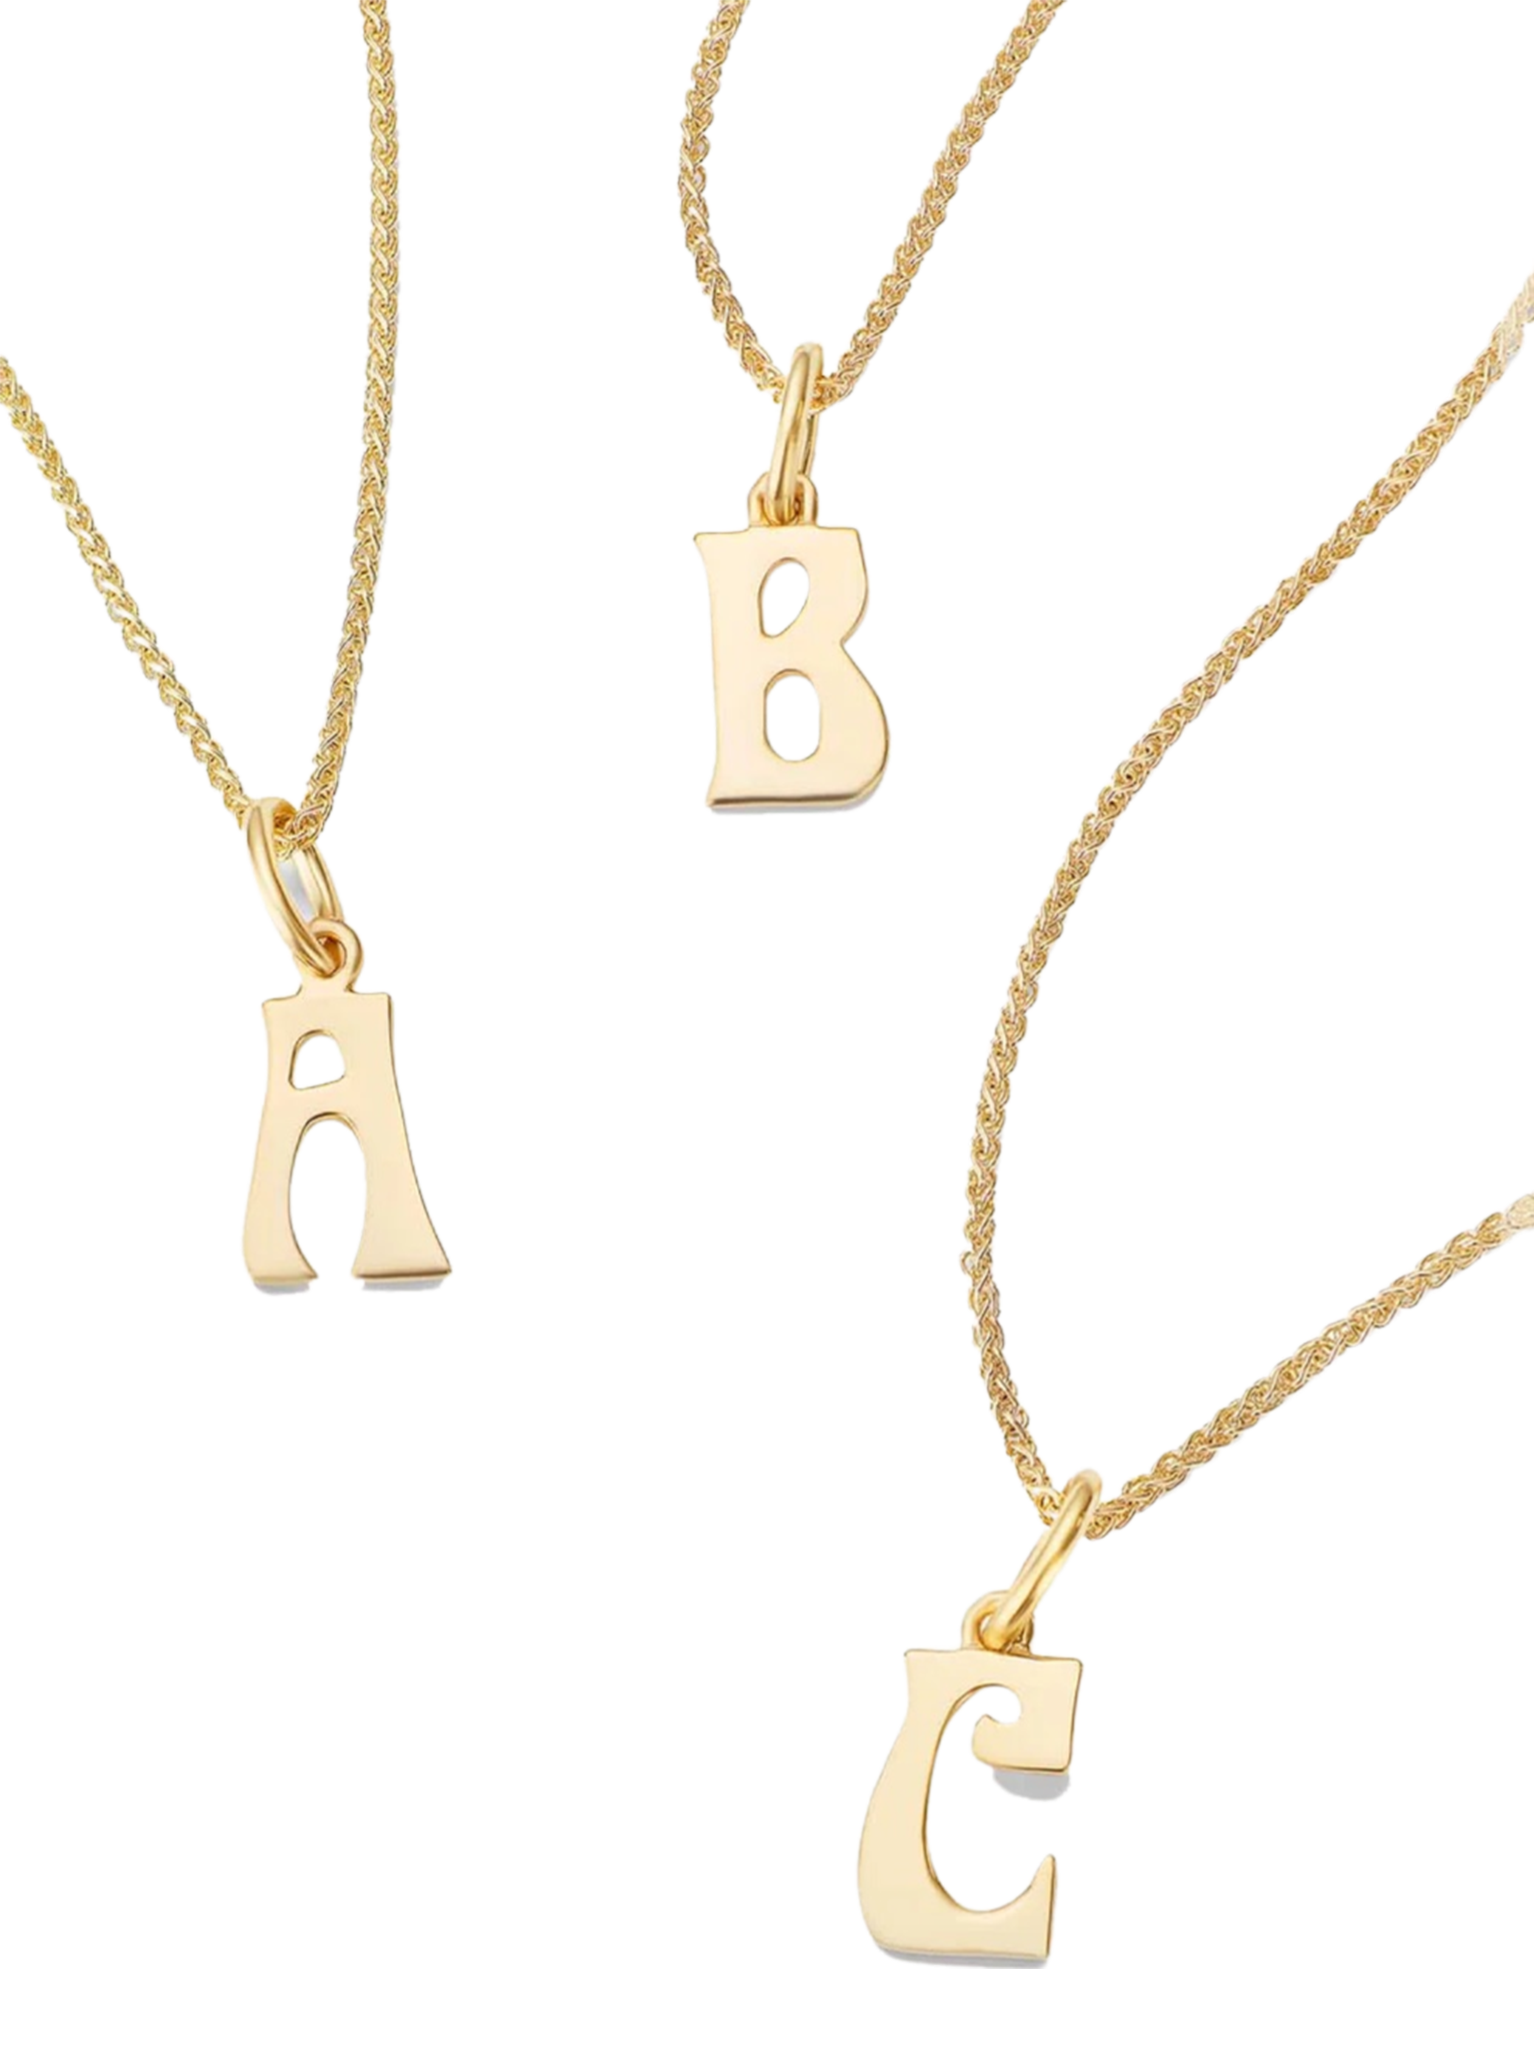 Letter charm necklace